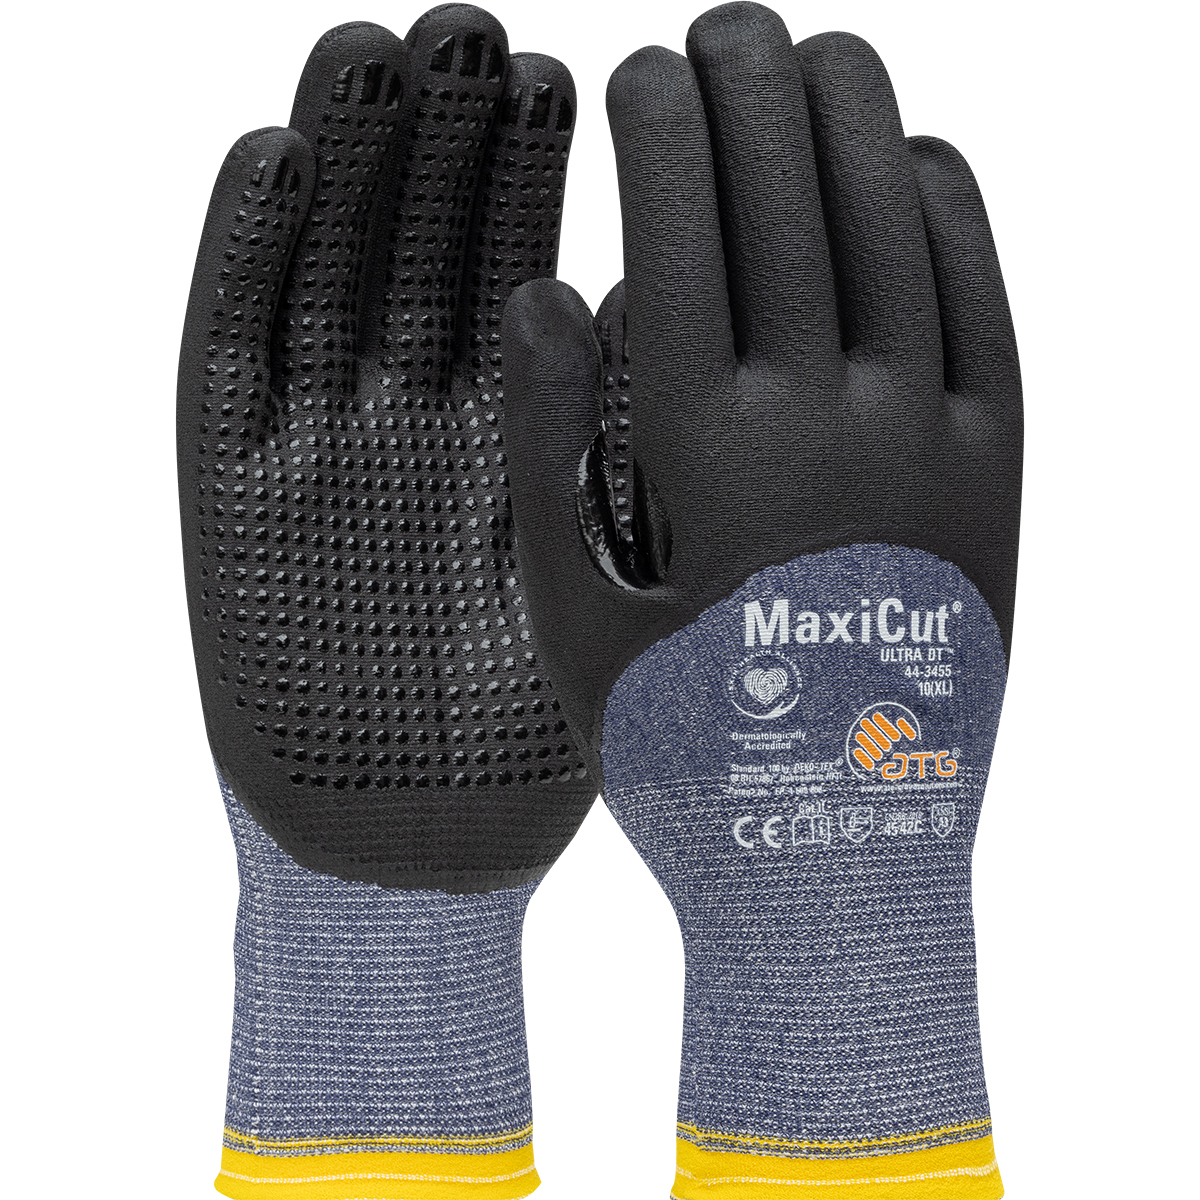 MaxiCut® Ultra DT™ 44-3455 Cut Resistant Gloves